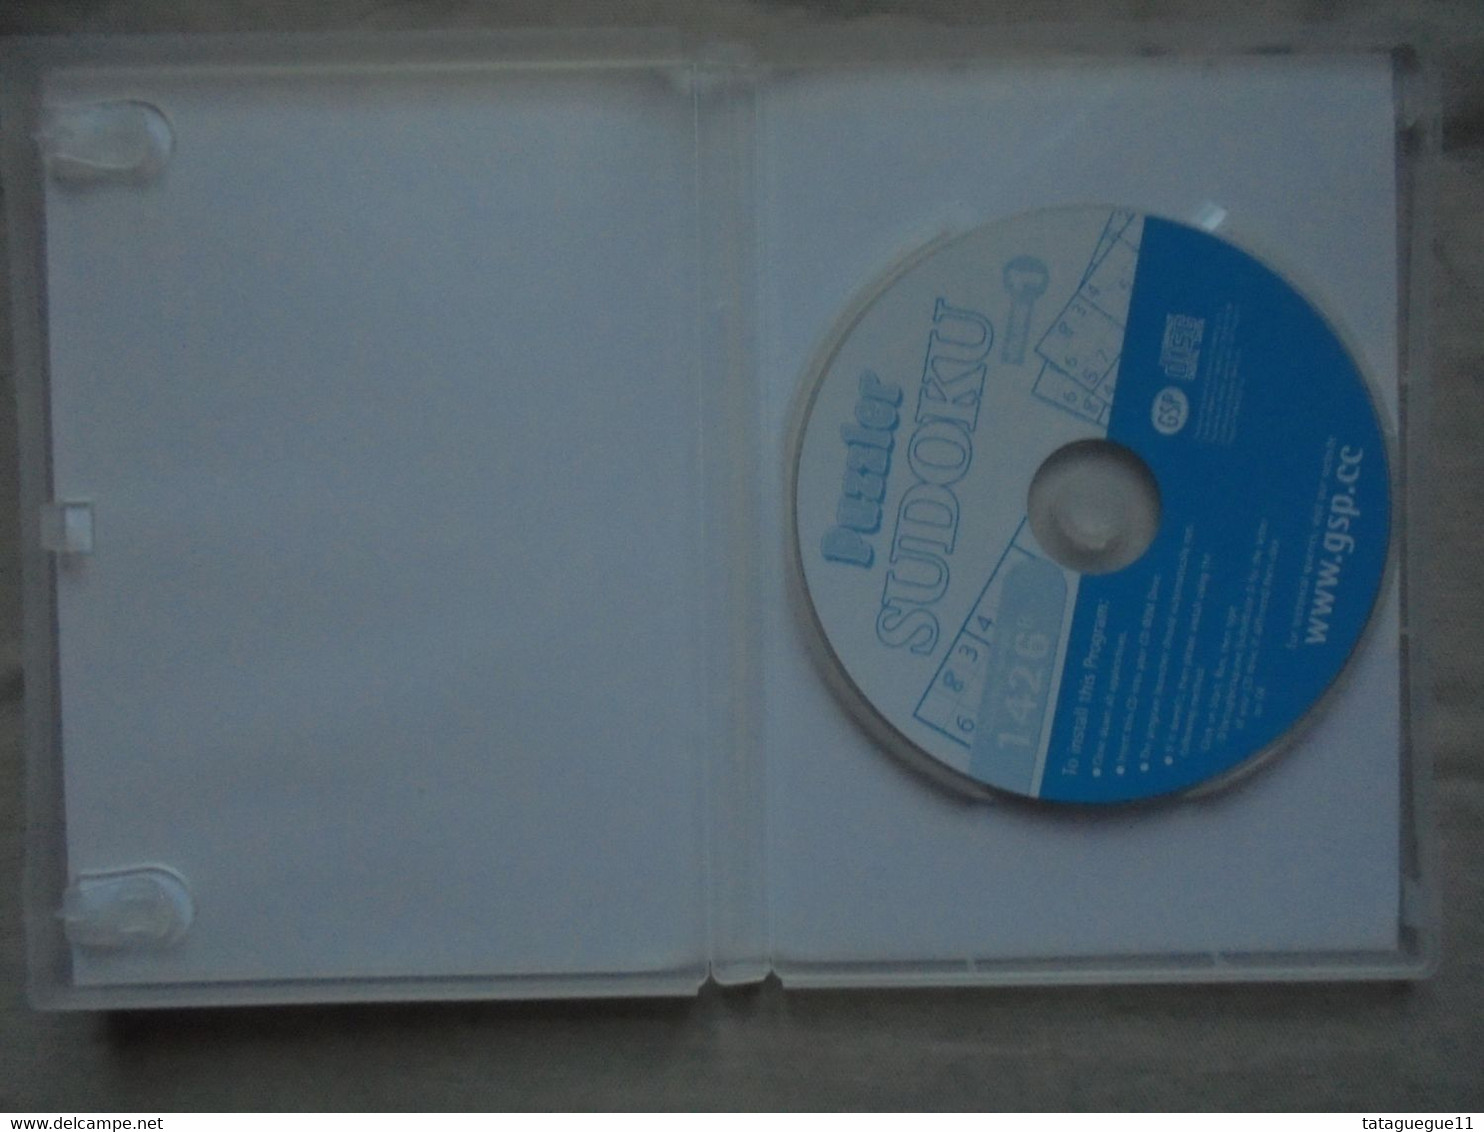 Vintage - Jeu PC CD - Puzzler Sudoku Voume 1 - 2005 - PC-Spiele